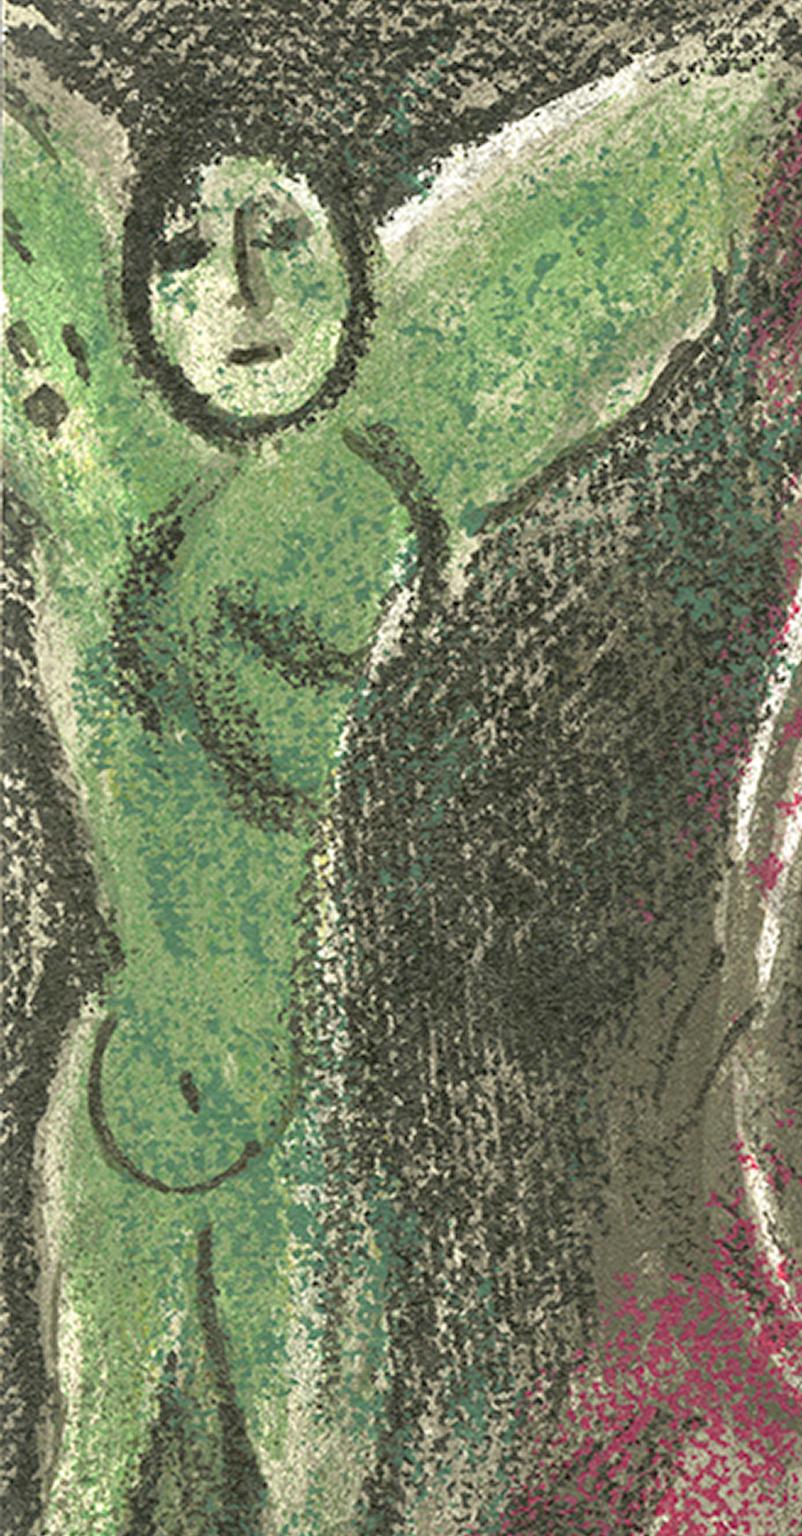 bella chagall wikipedia